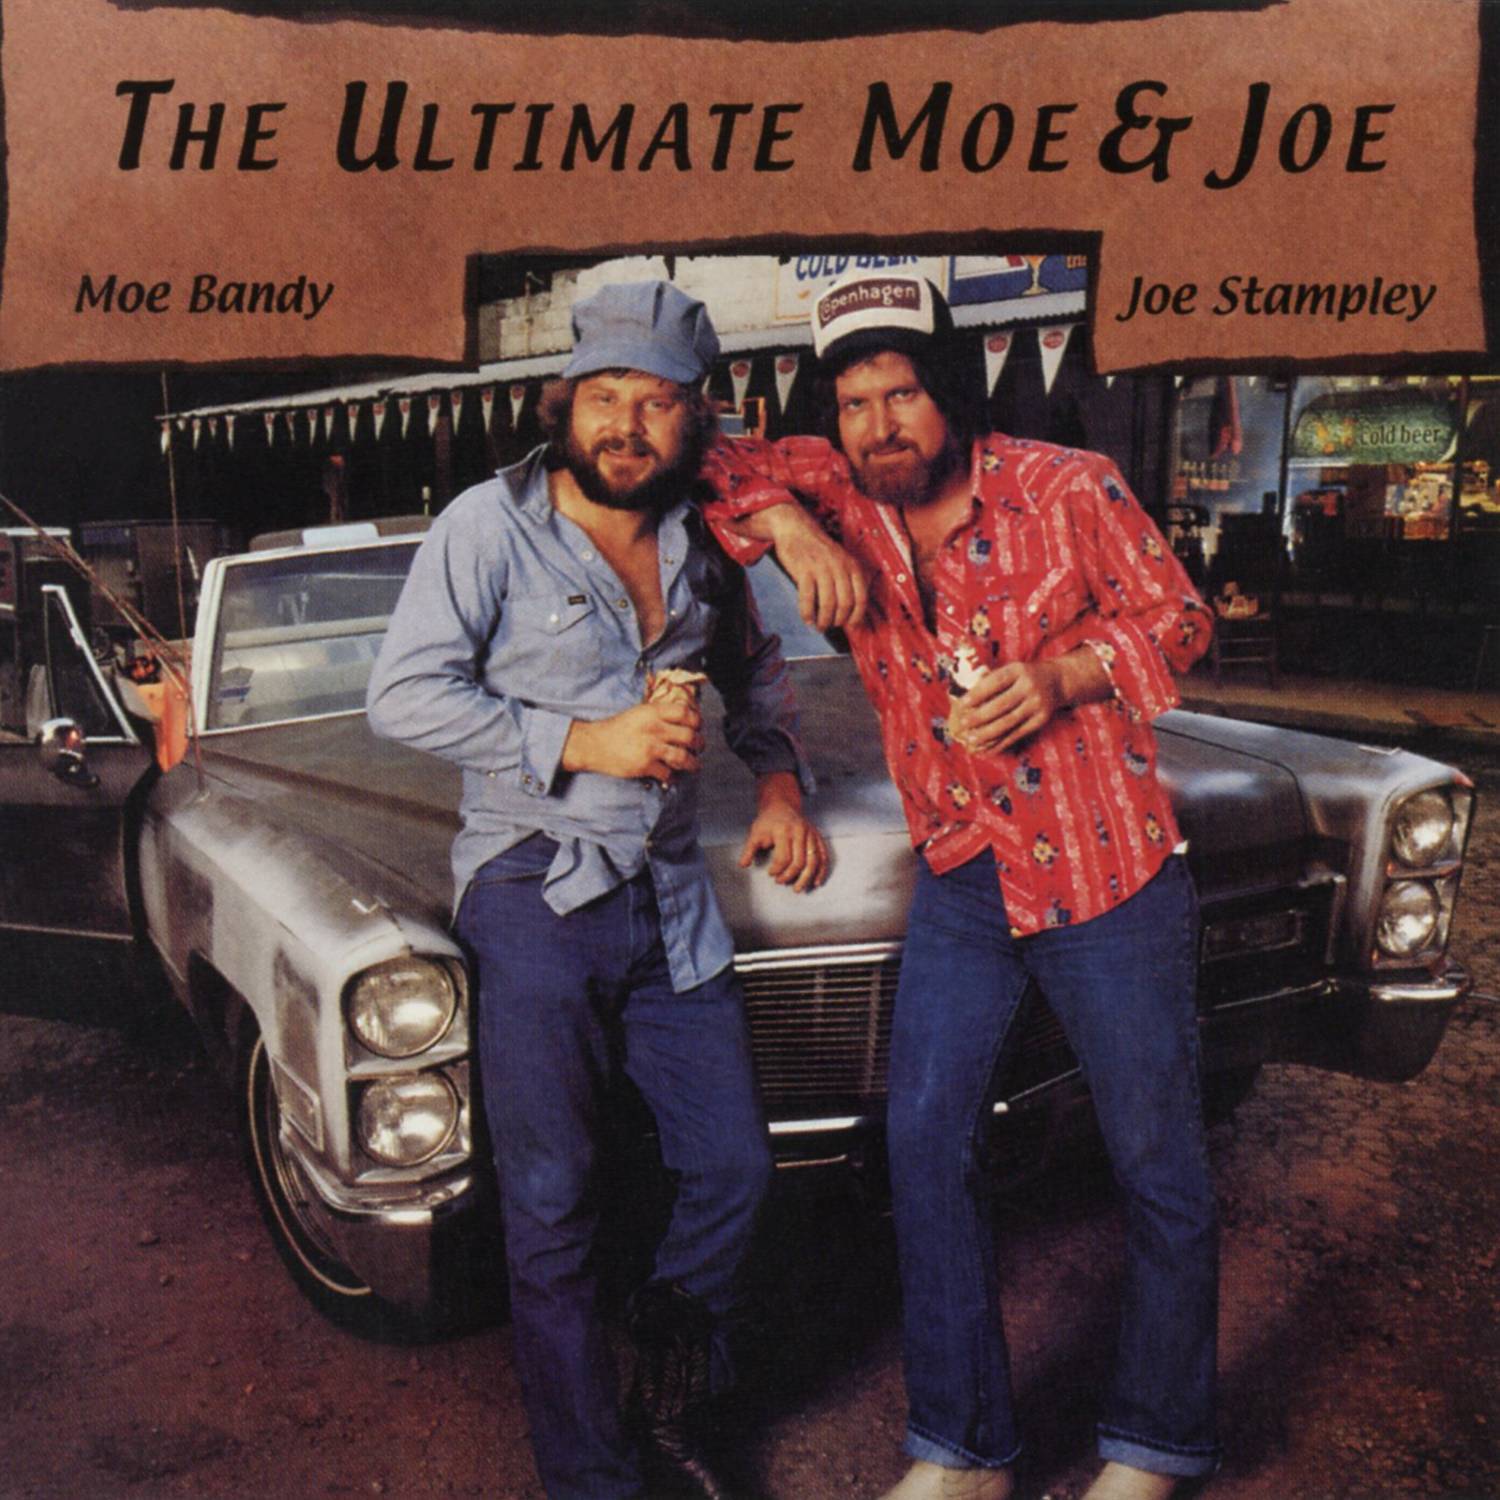 The Ultimate Moe & Joe